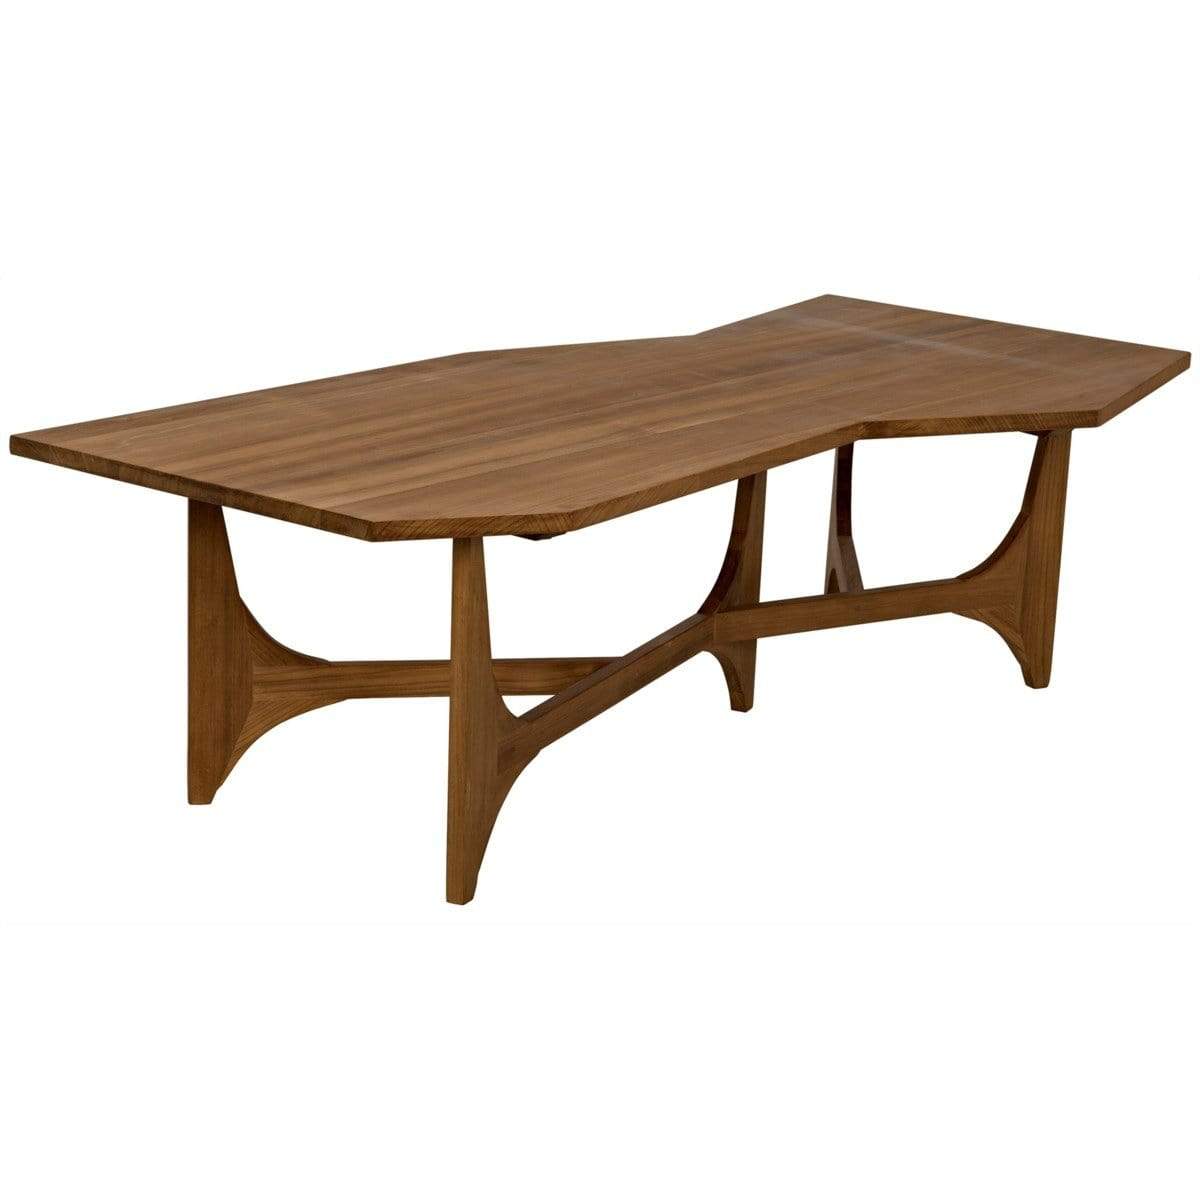 Noir Fenton Coffee Table Furniture noir-GTAB1045GT 00842449121980